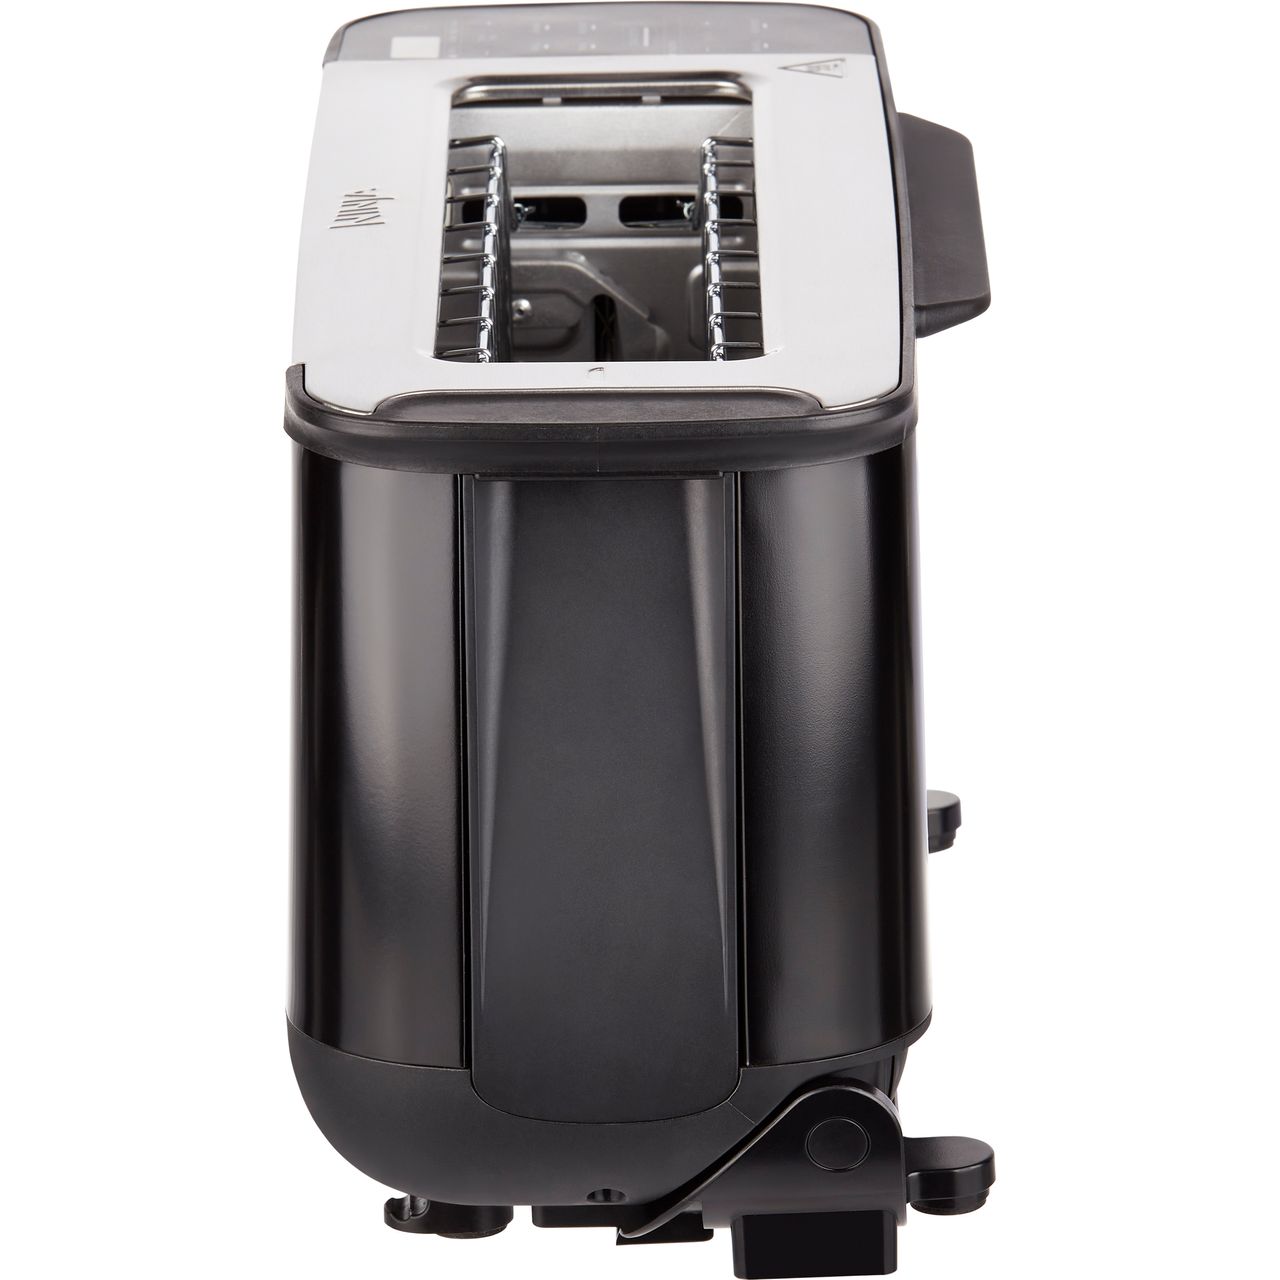 NINJA Foodi 3-in-1 Toaster, Grill & Panini Press ST200UK - Black